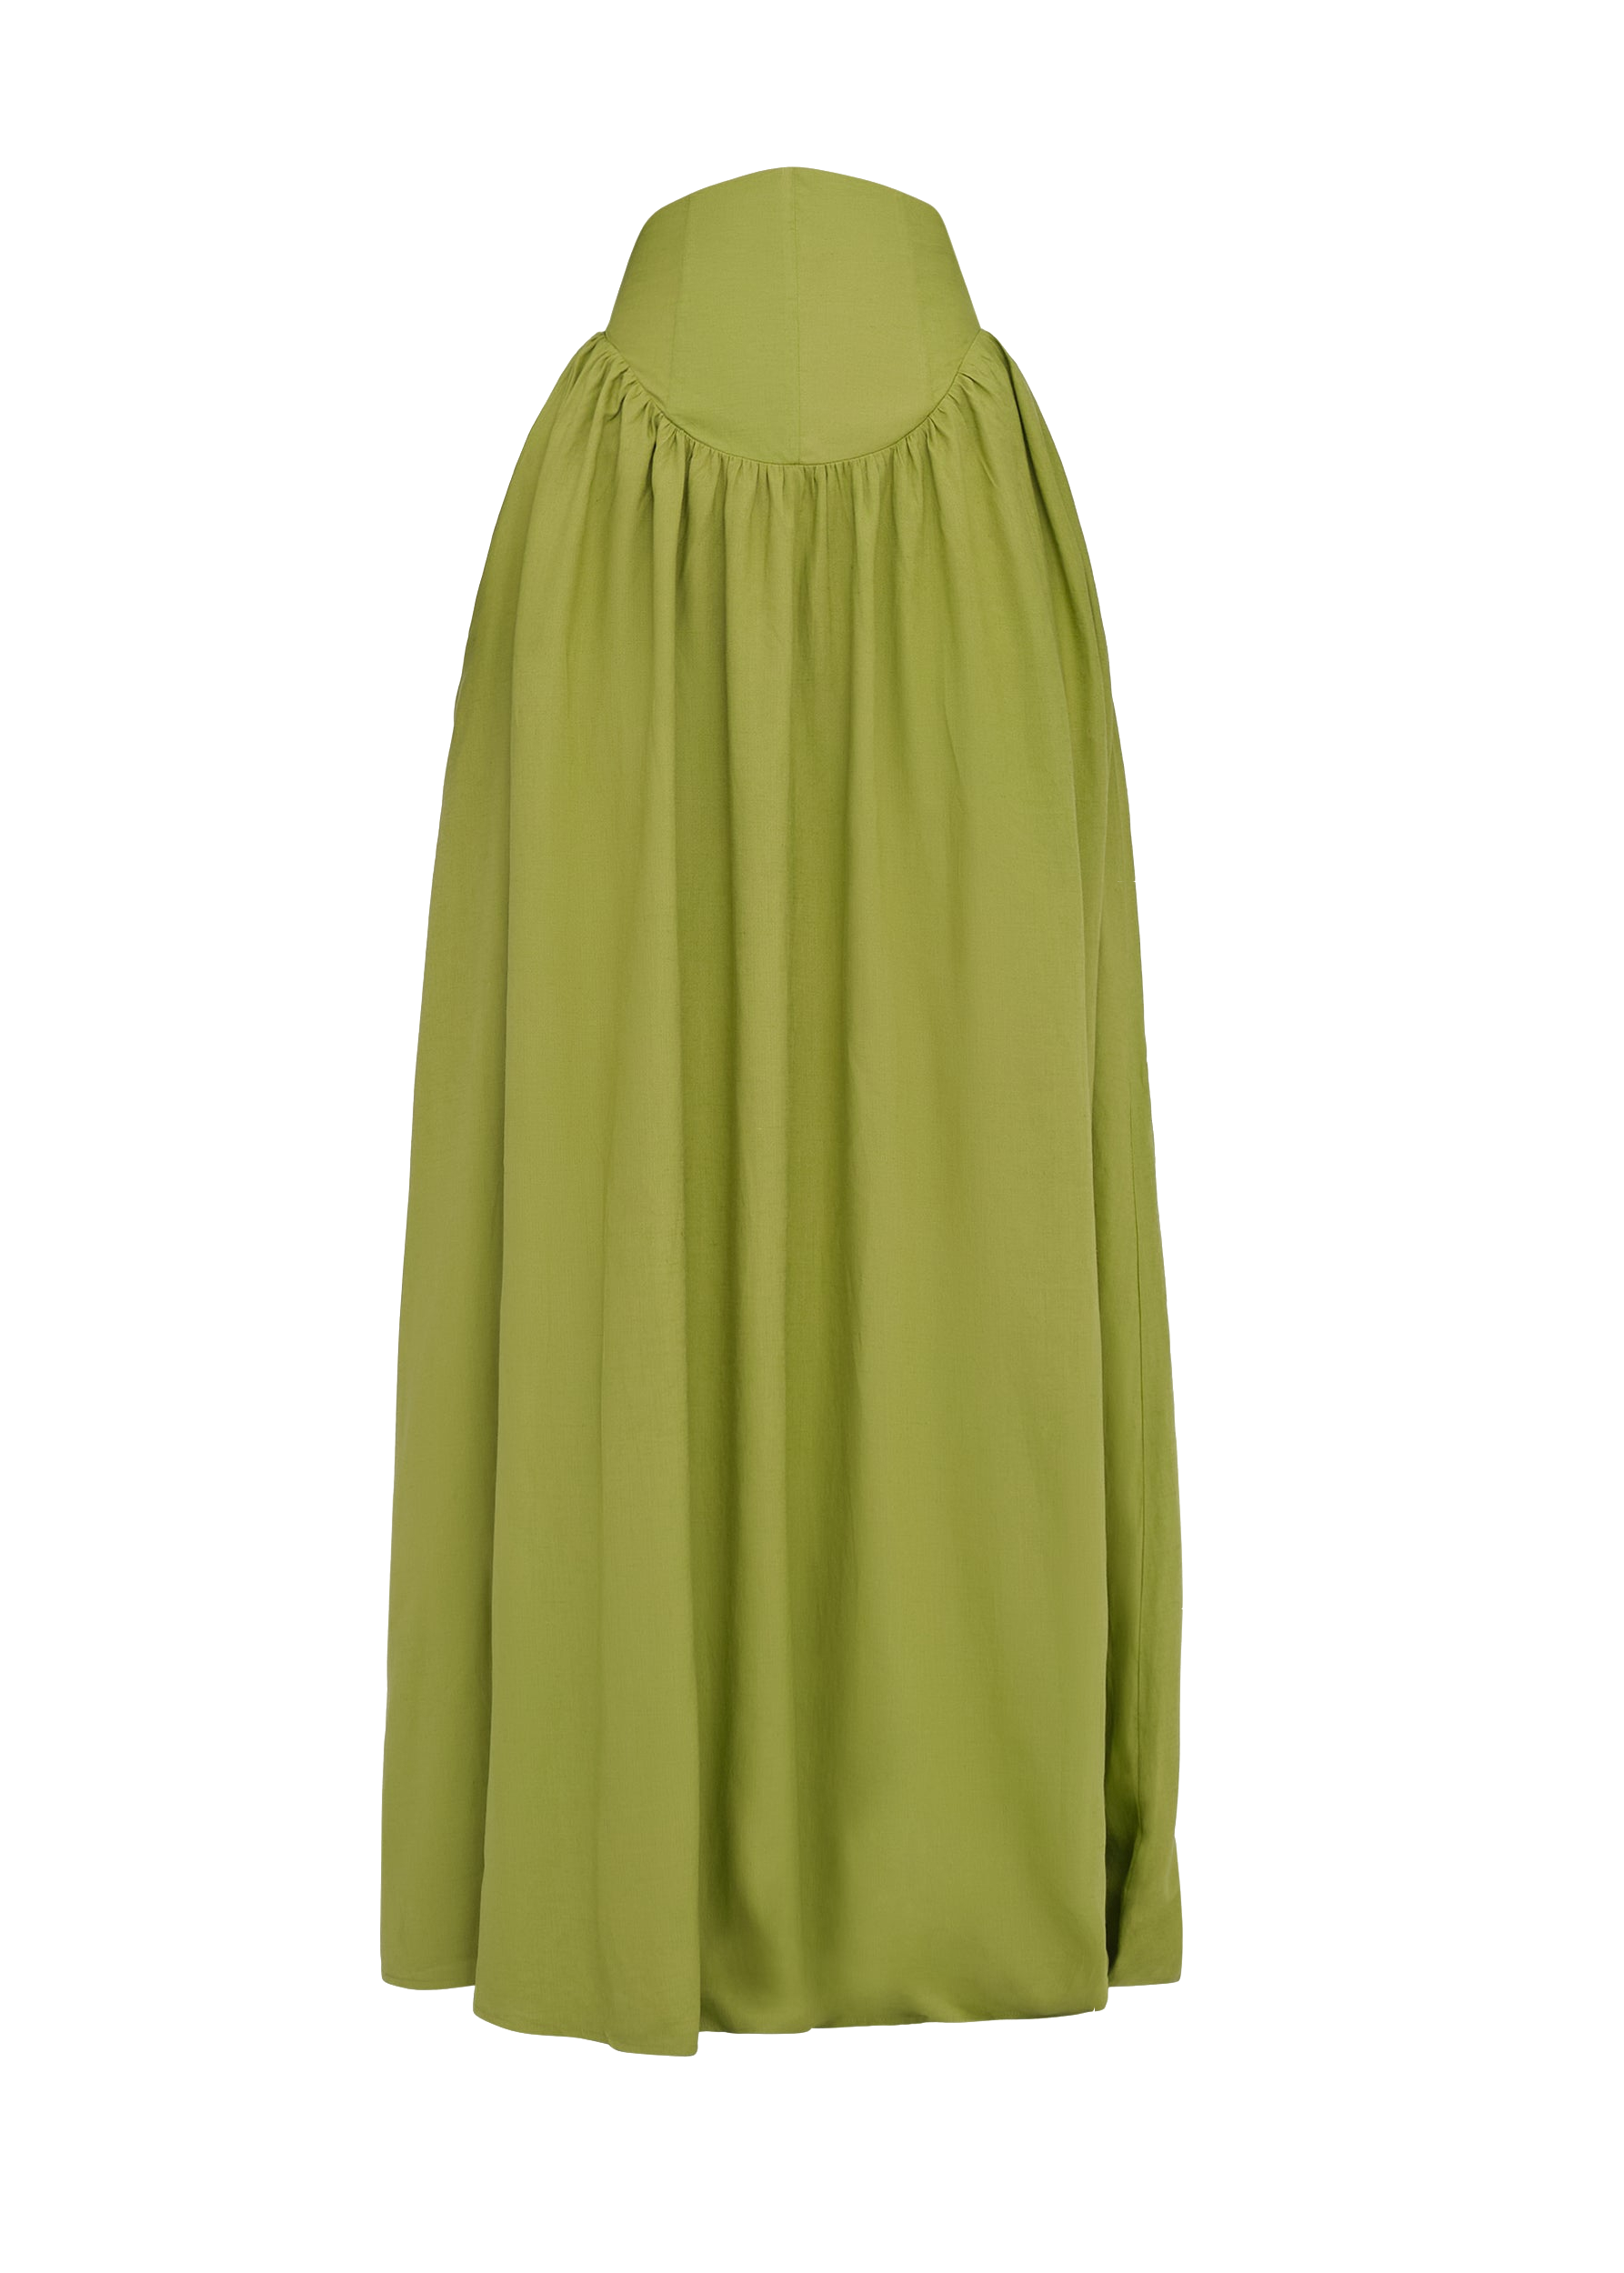 Andrea Iyamah Pado Corset Maxi Skirt In Green